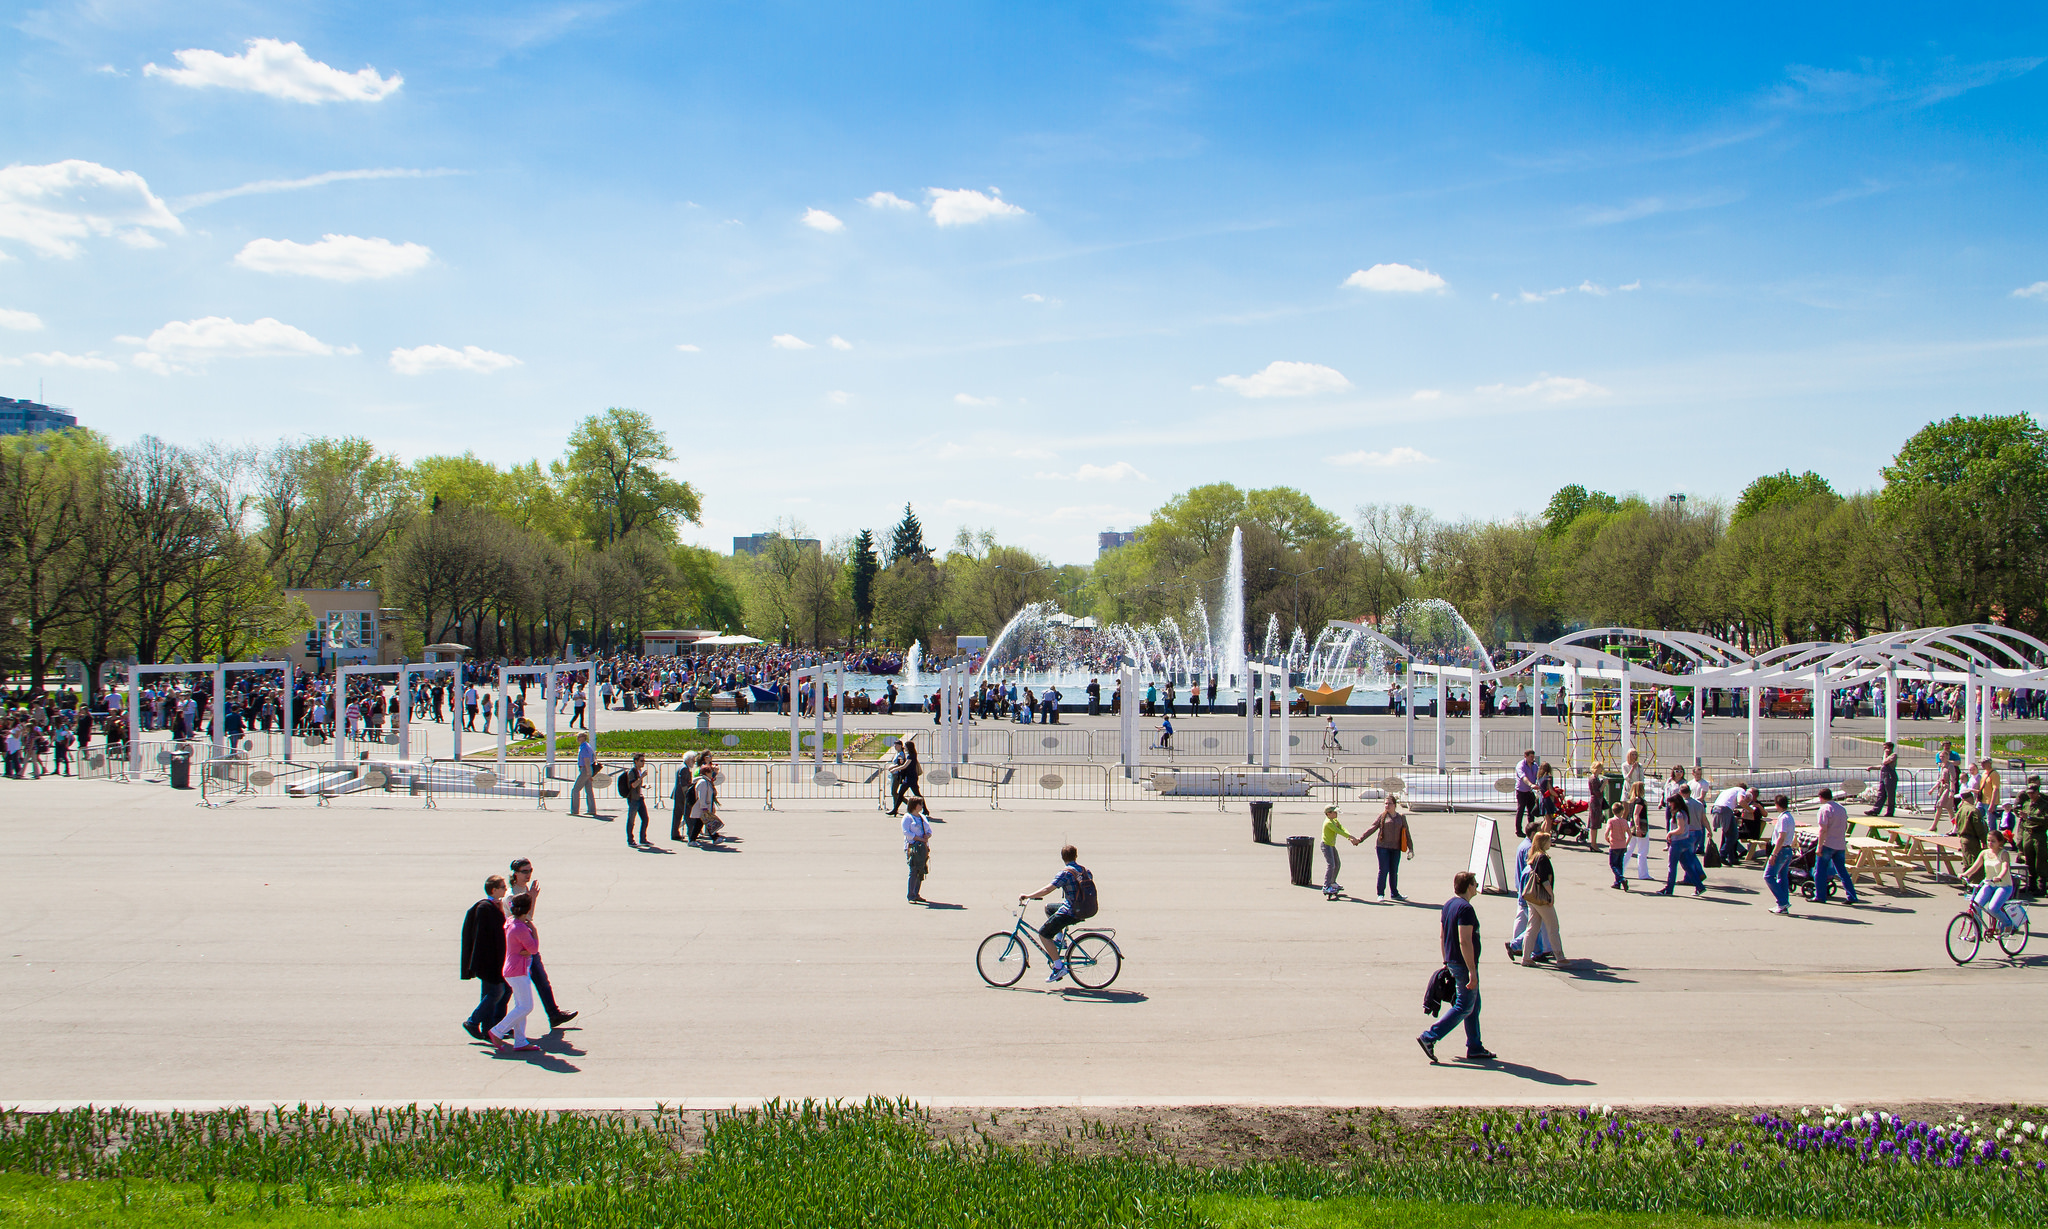 Gorky Park today. Image: Valeri Pizhanski